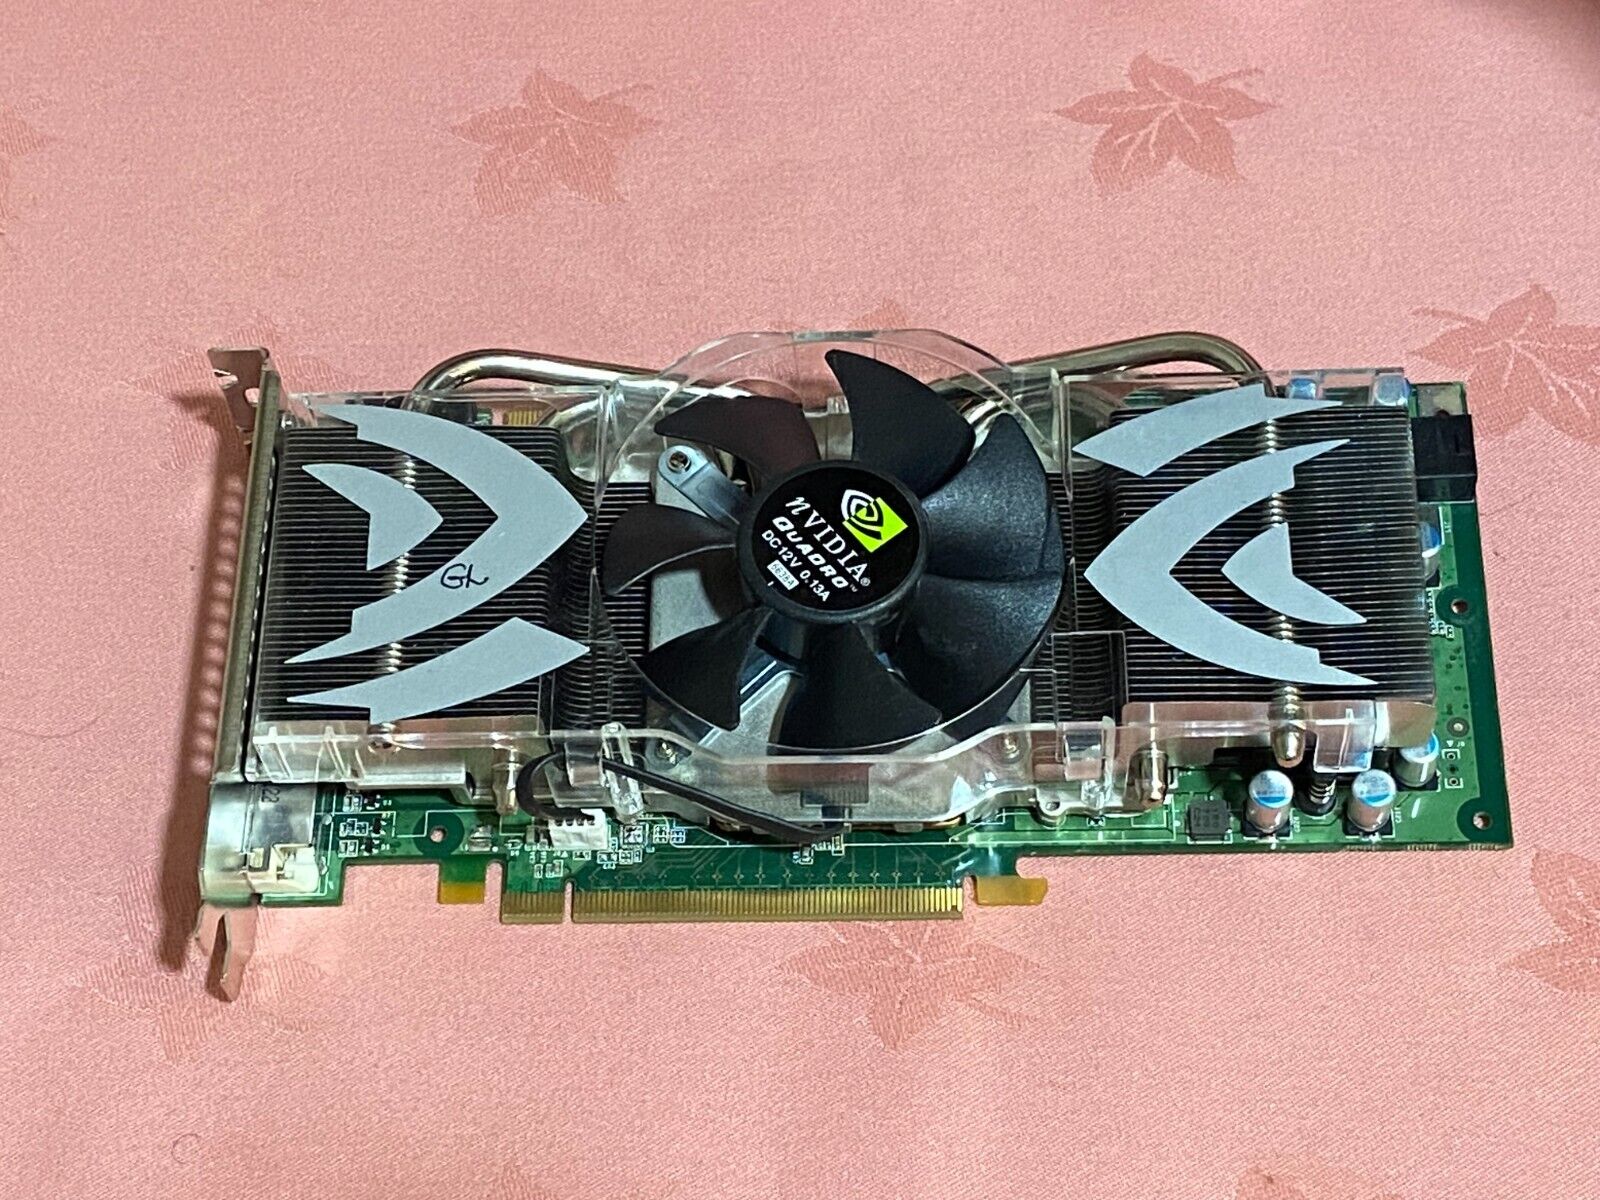 PNY TECHNOLOGIES Nvidia Quadro FX5500 VCQFX5500-PCIE P490 1GB GDDR3 Graphic card